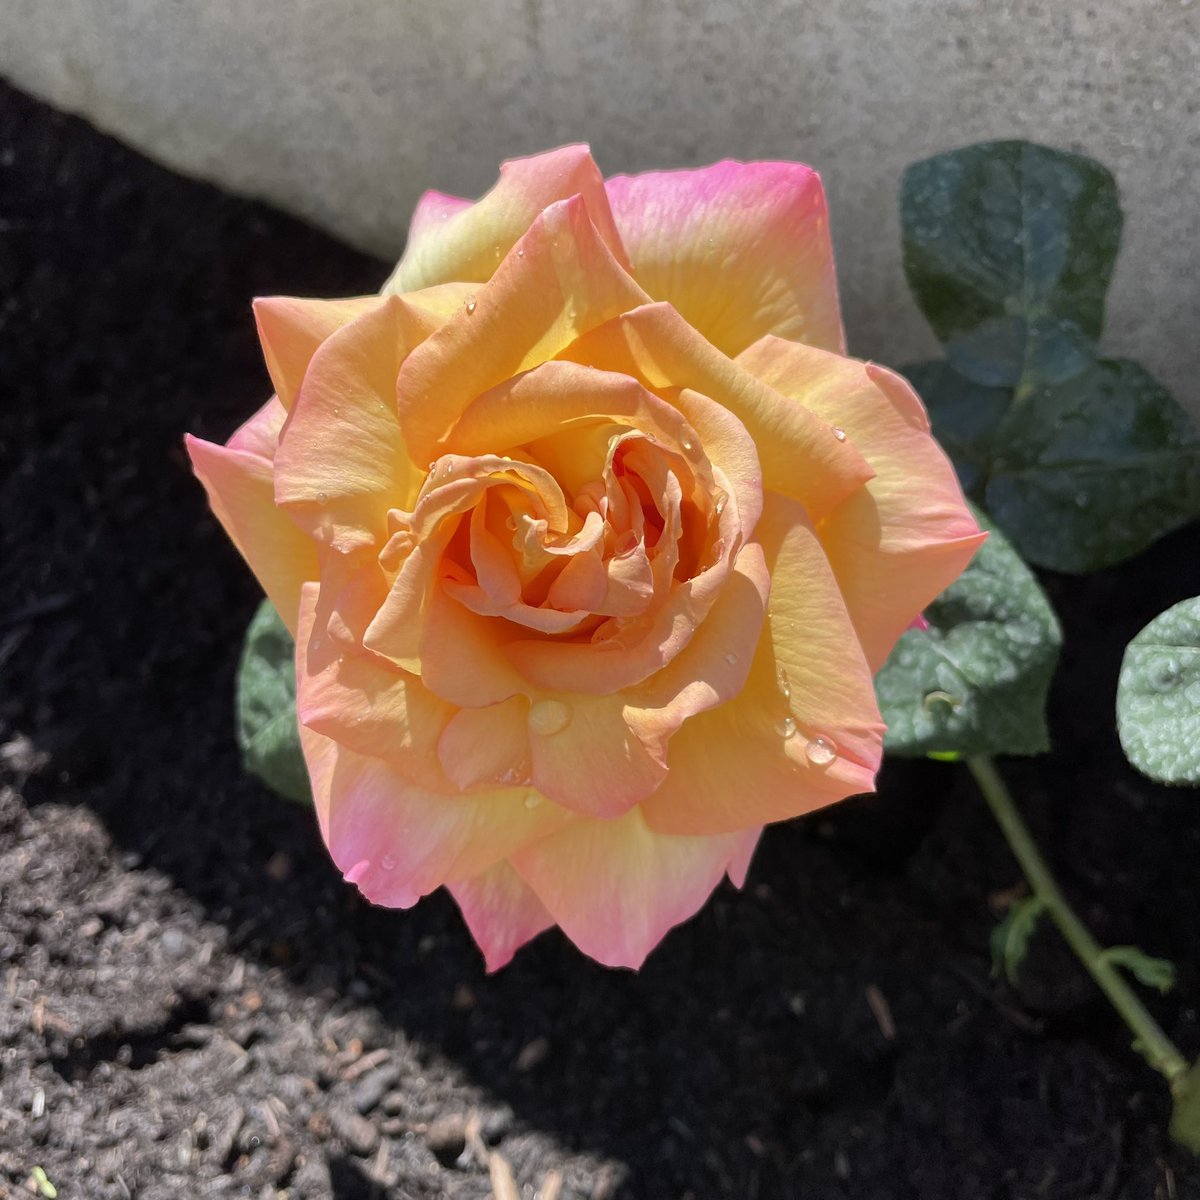 My first rose 🏵️
#gardening #GardeningTwitter #summervibes #authorlife